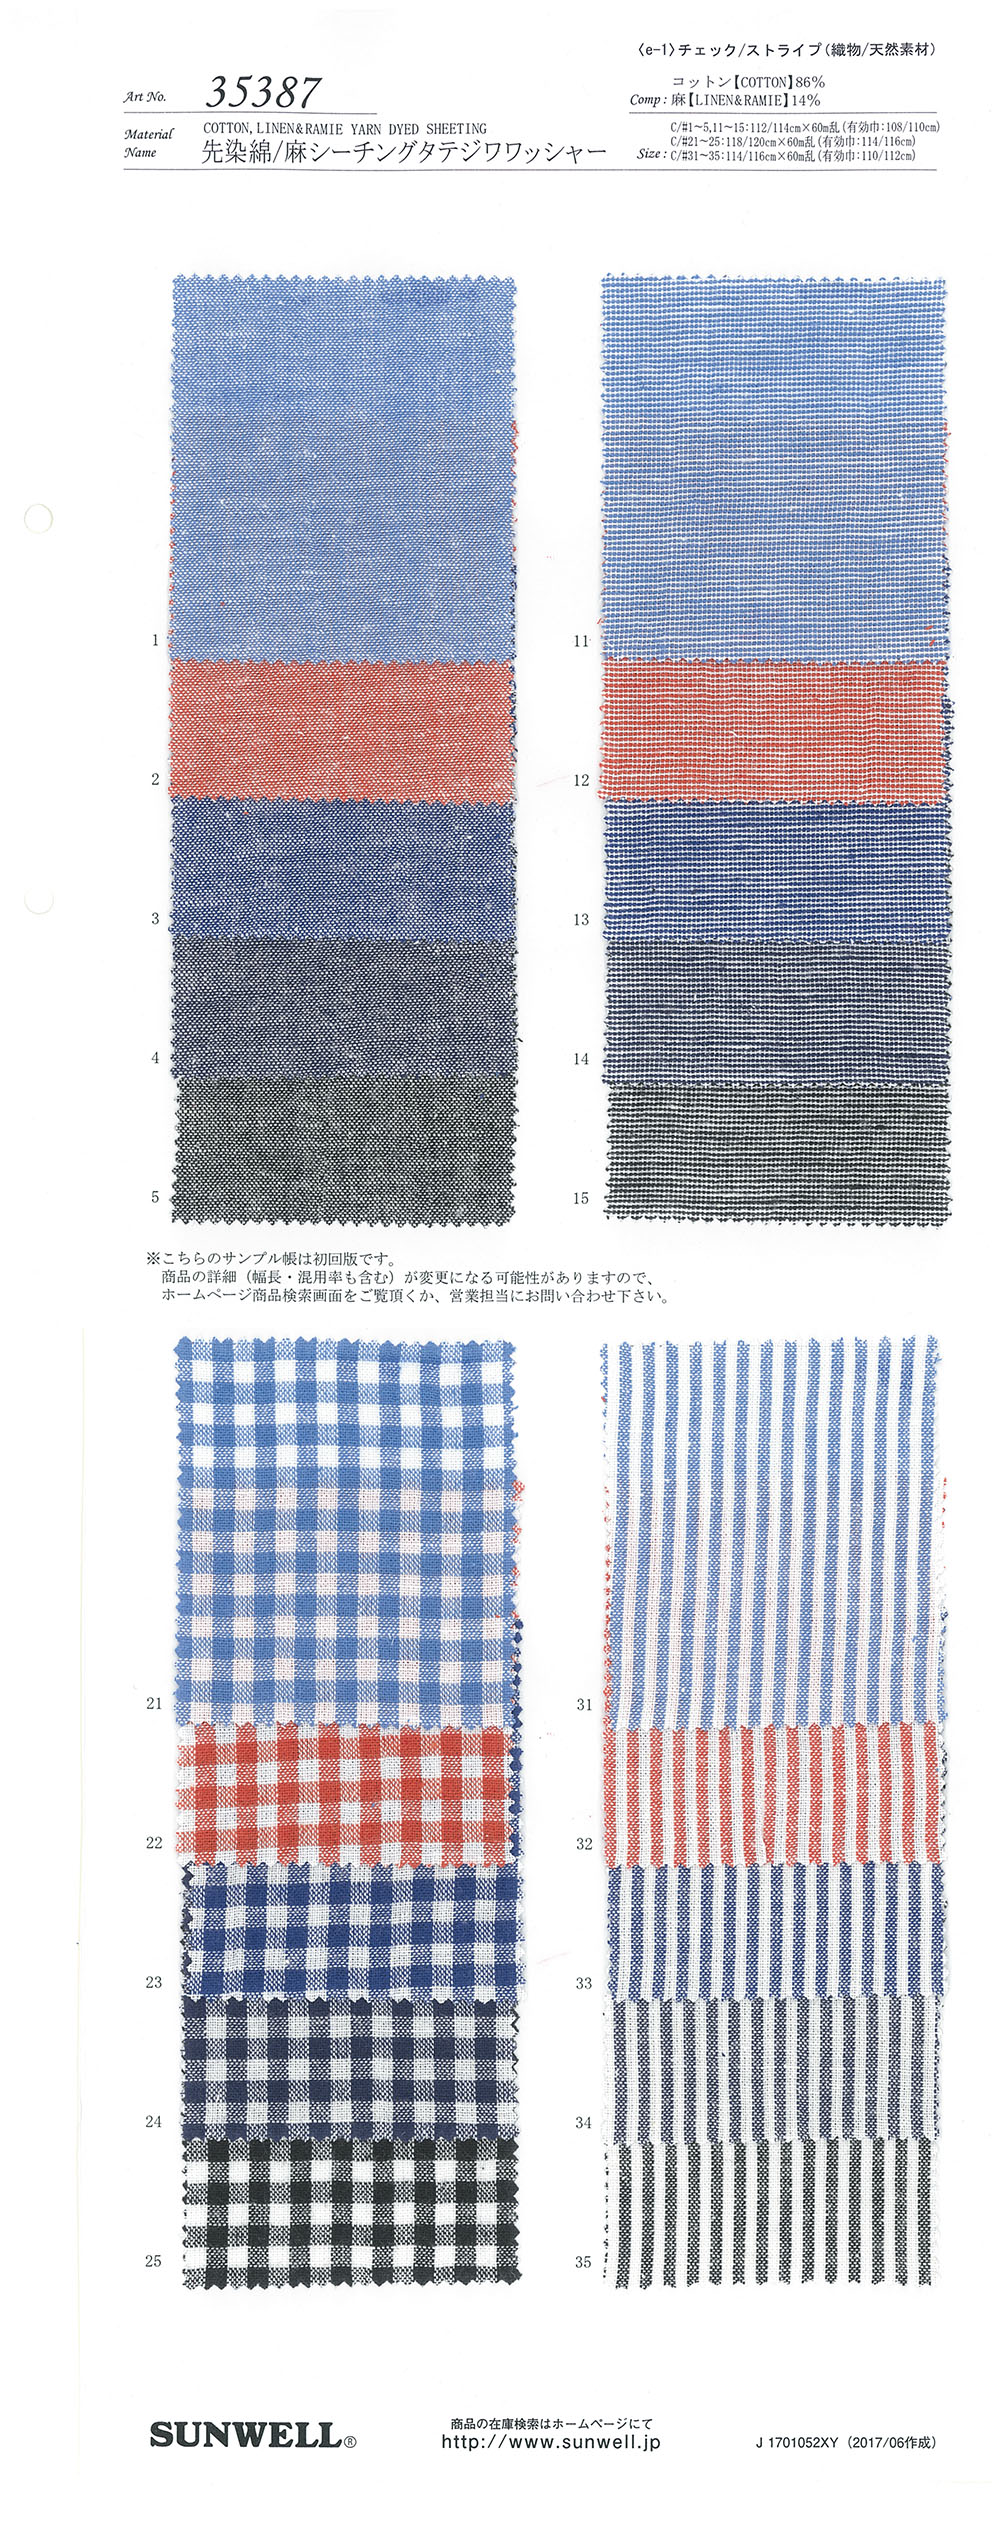 35387 Garngefärbte Baumwolle/Leinen Loomstate Vertical Washing Processing[Textilgewebe] SUNWELL